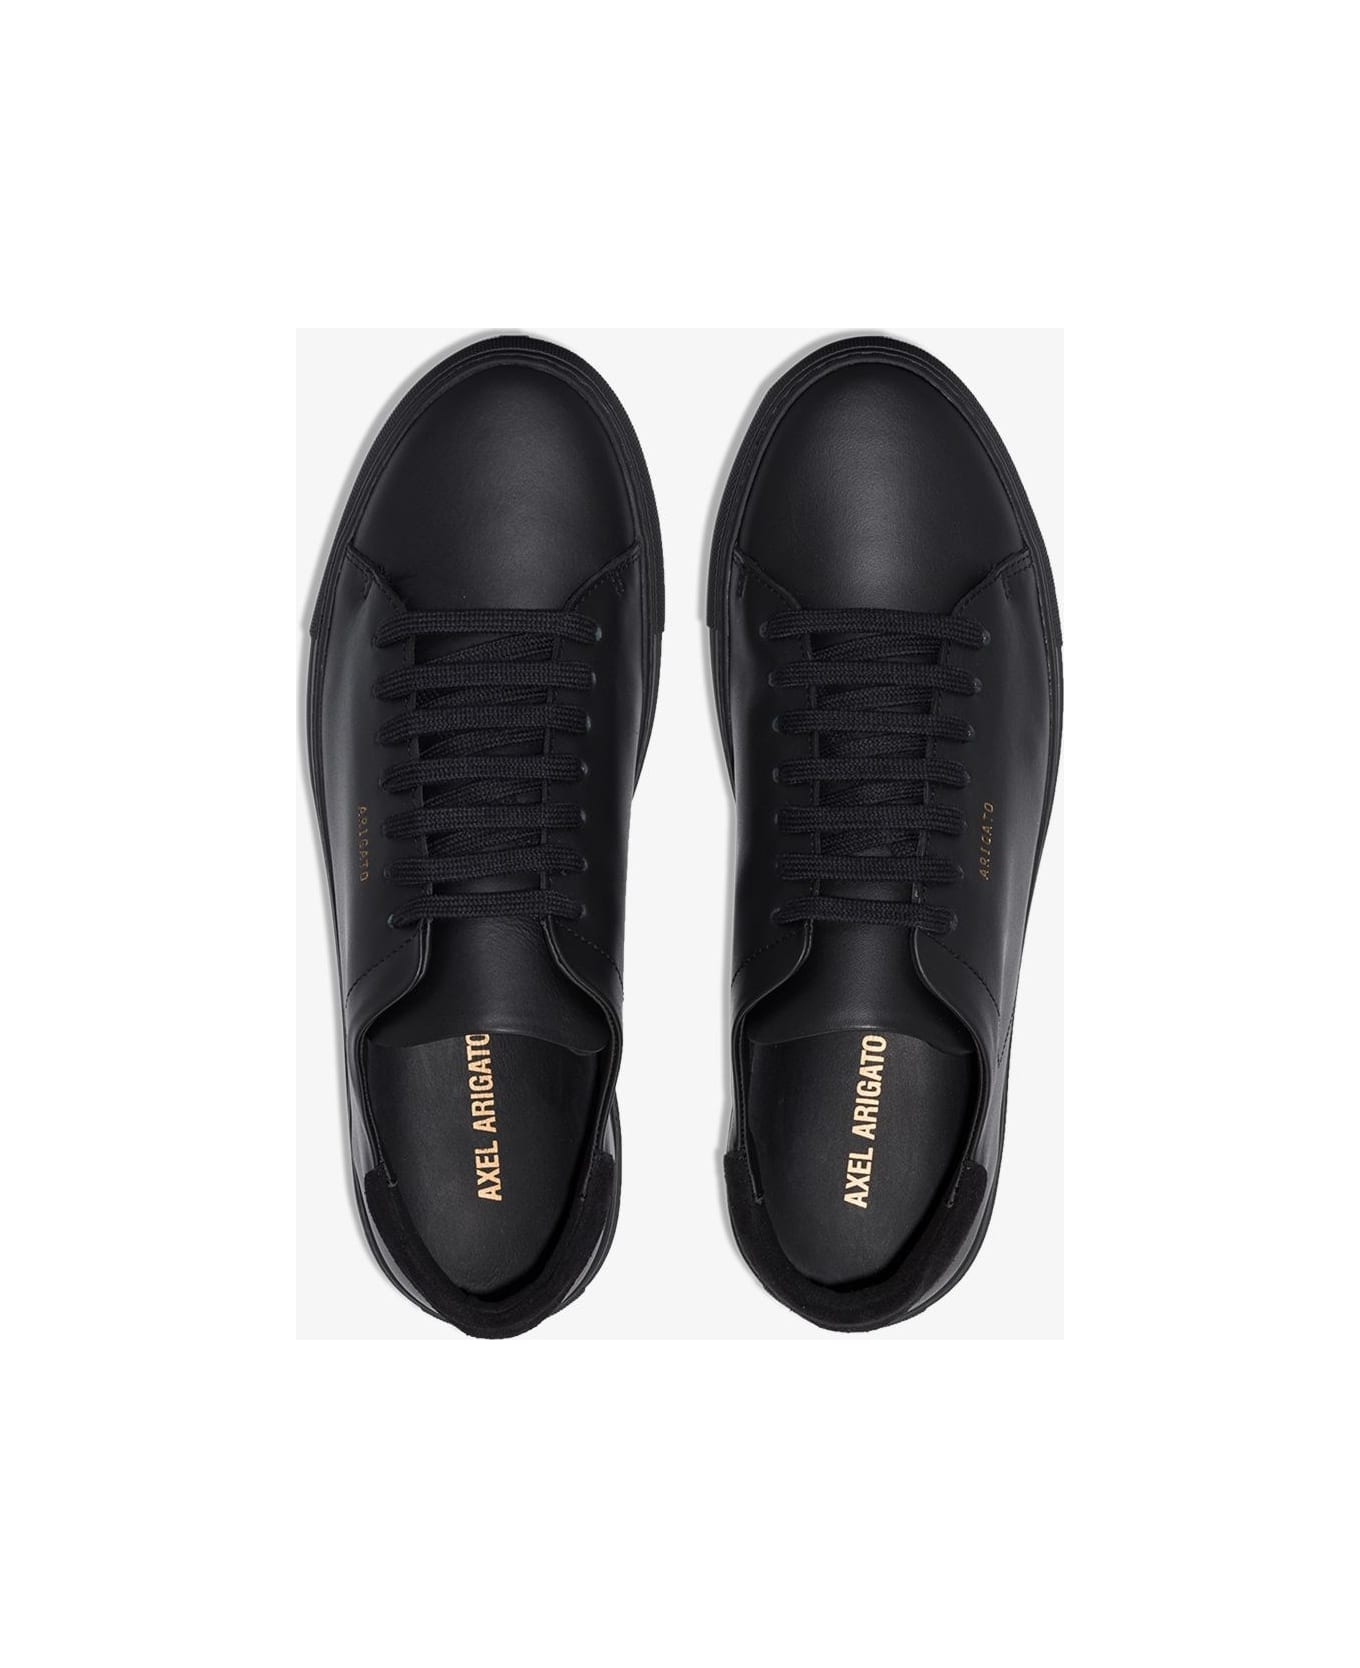 Axel Arigato Black Leather Sneakers - Black スニーカー